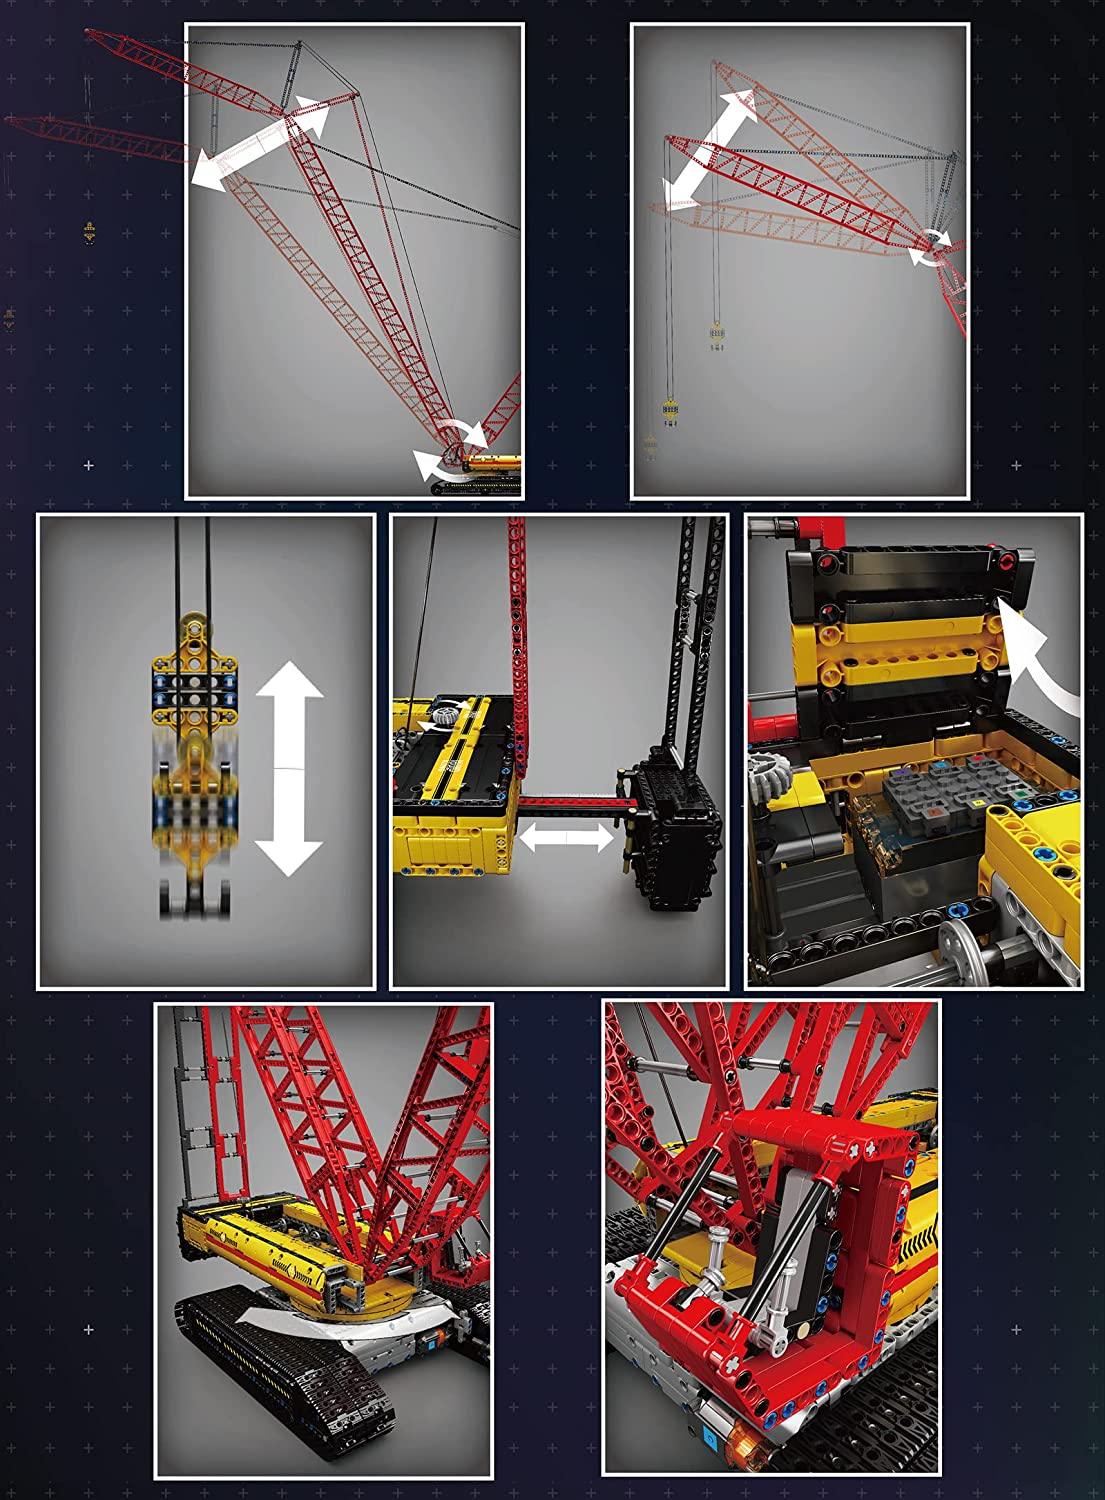 LR13000 Crawler Crane s set, compatible with Lego